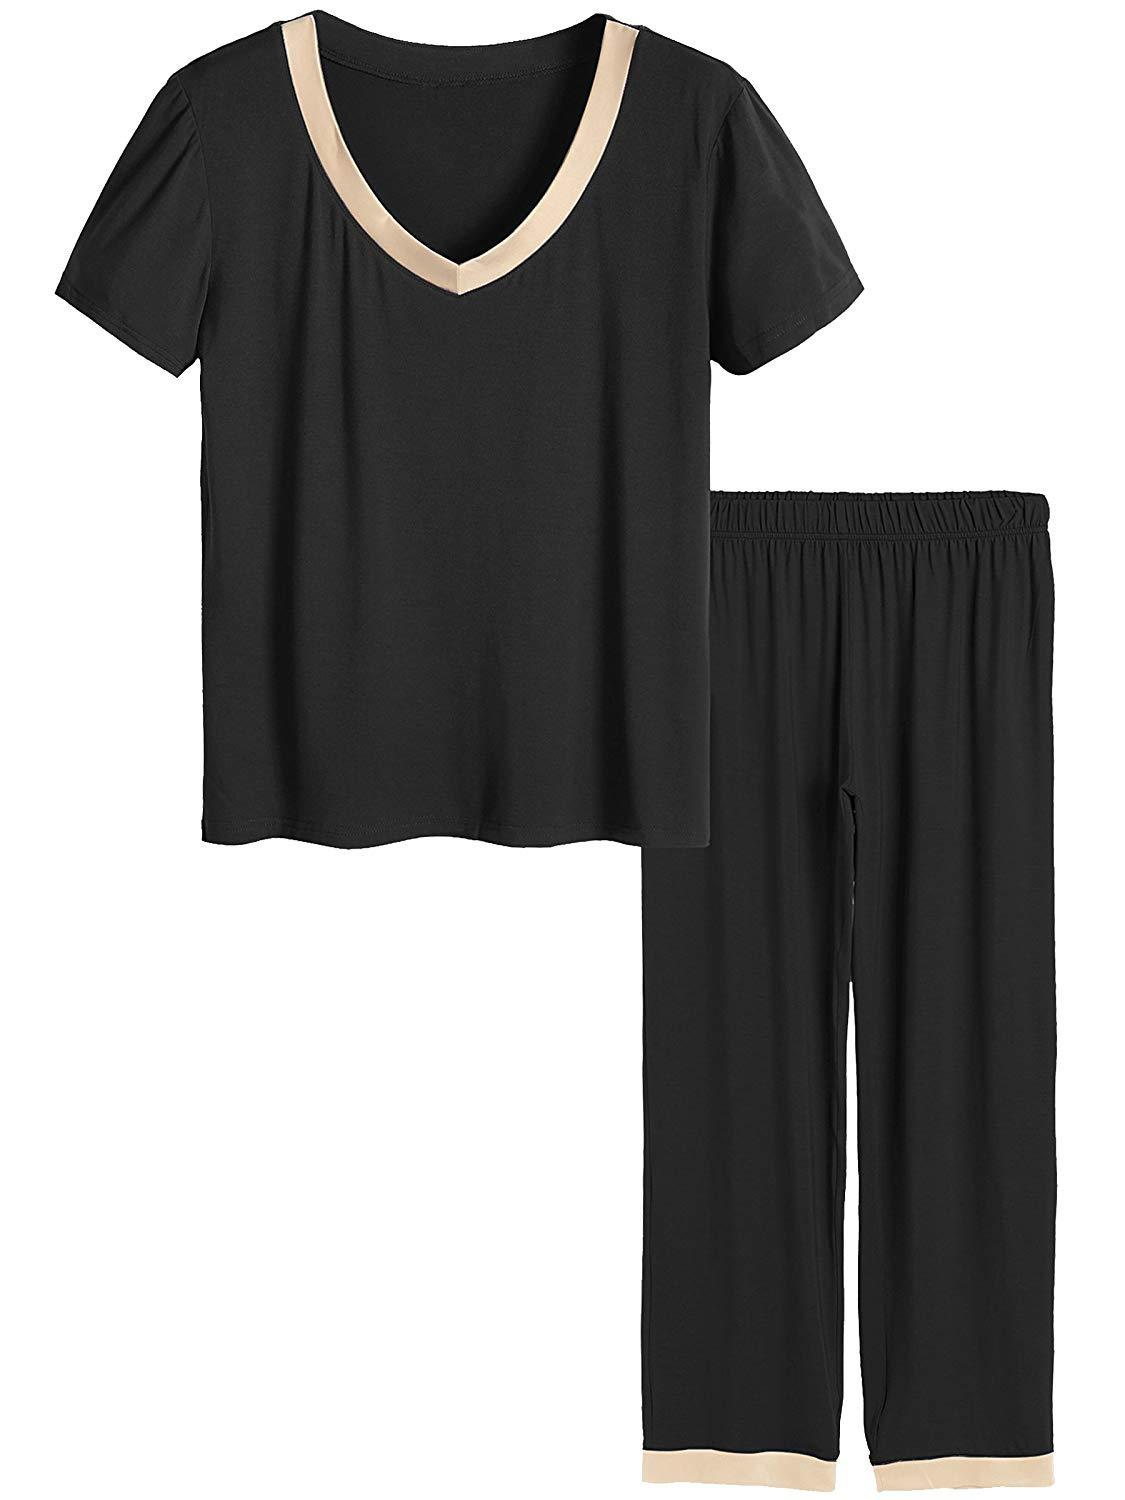 Women's Bamboo Sleepwear Short Sleeves Top with Pants Pajama Set - Latuza